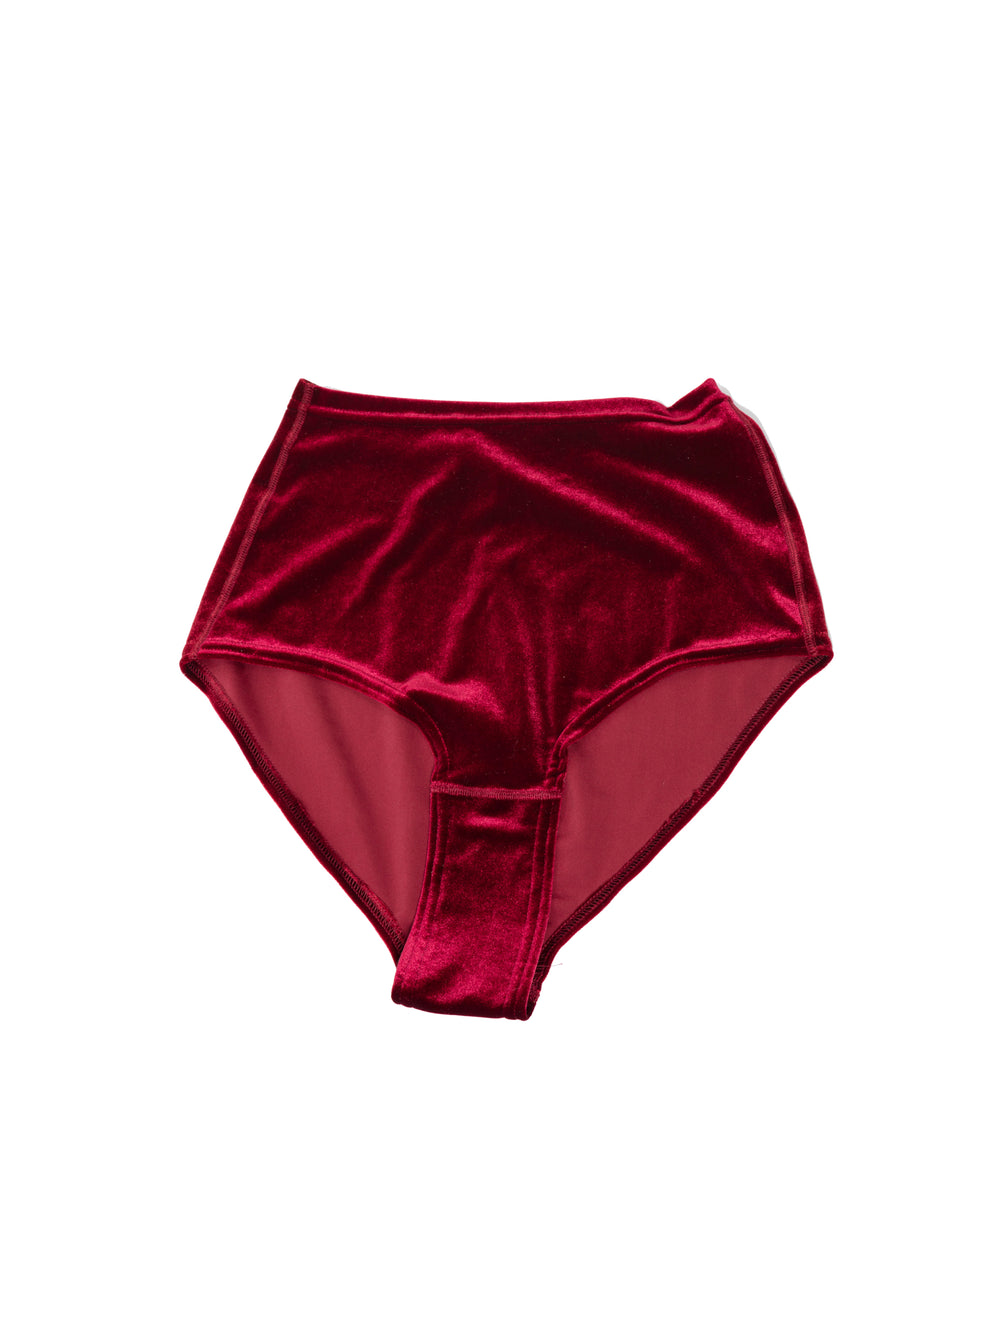 PINK Velvet Panties for Women